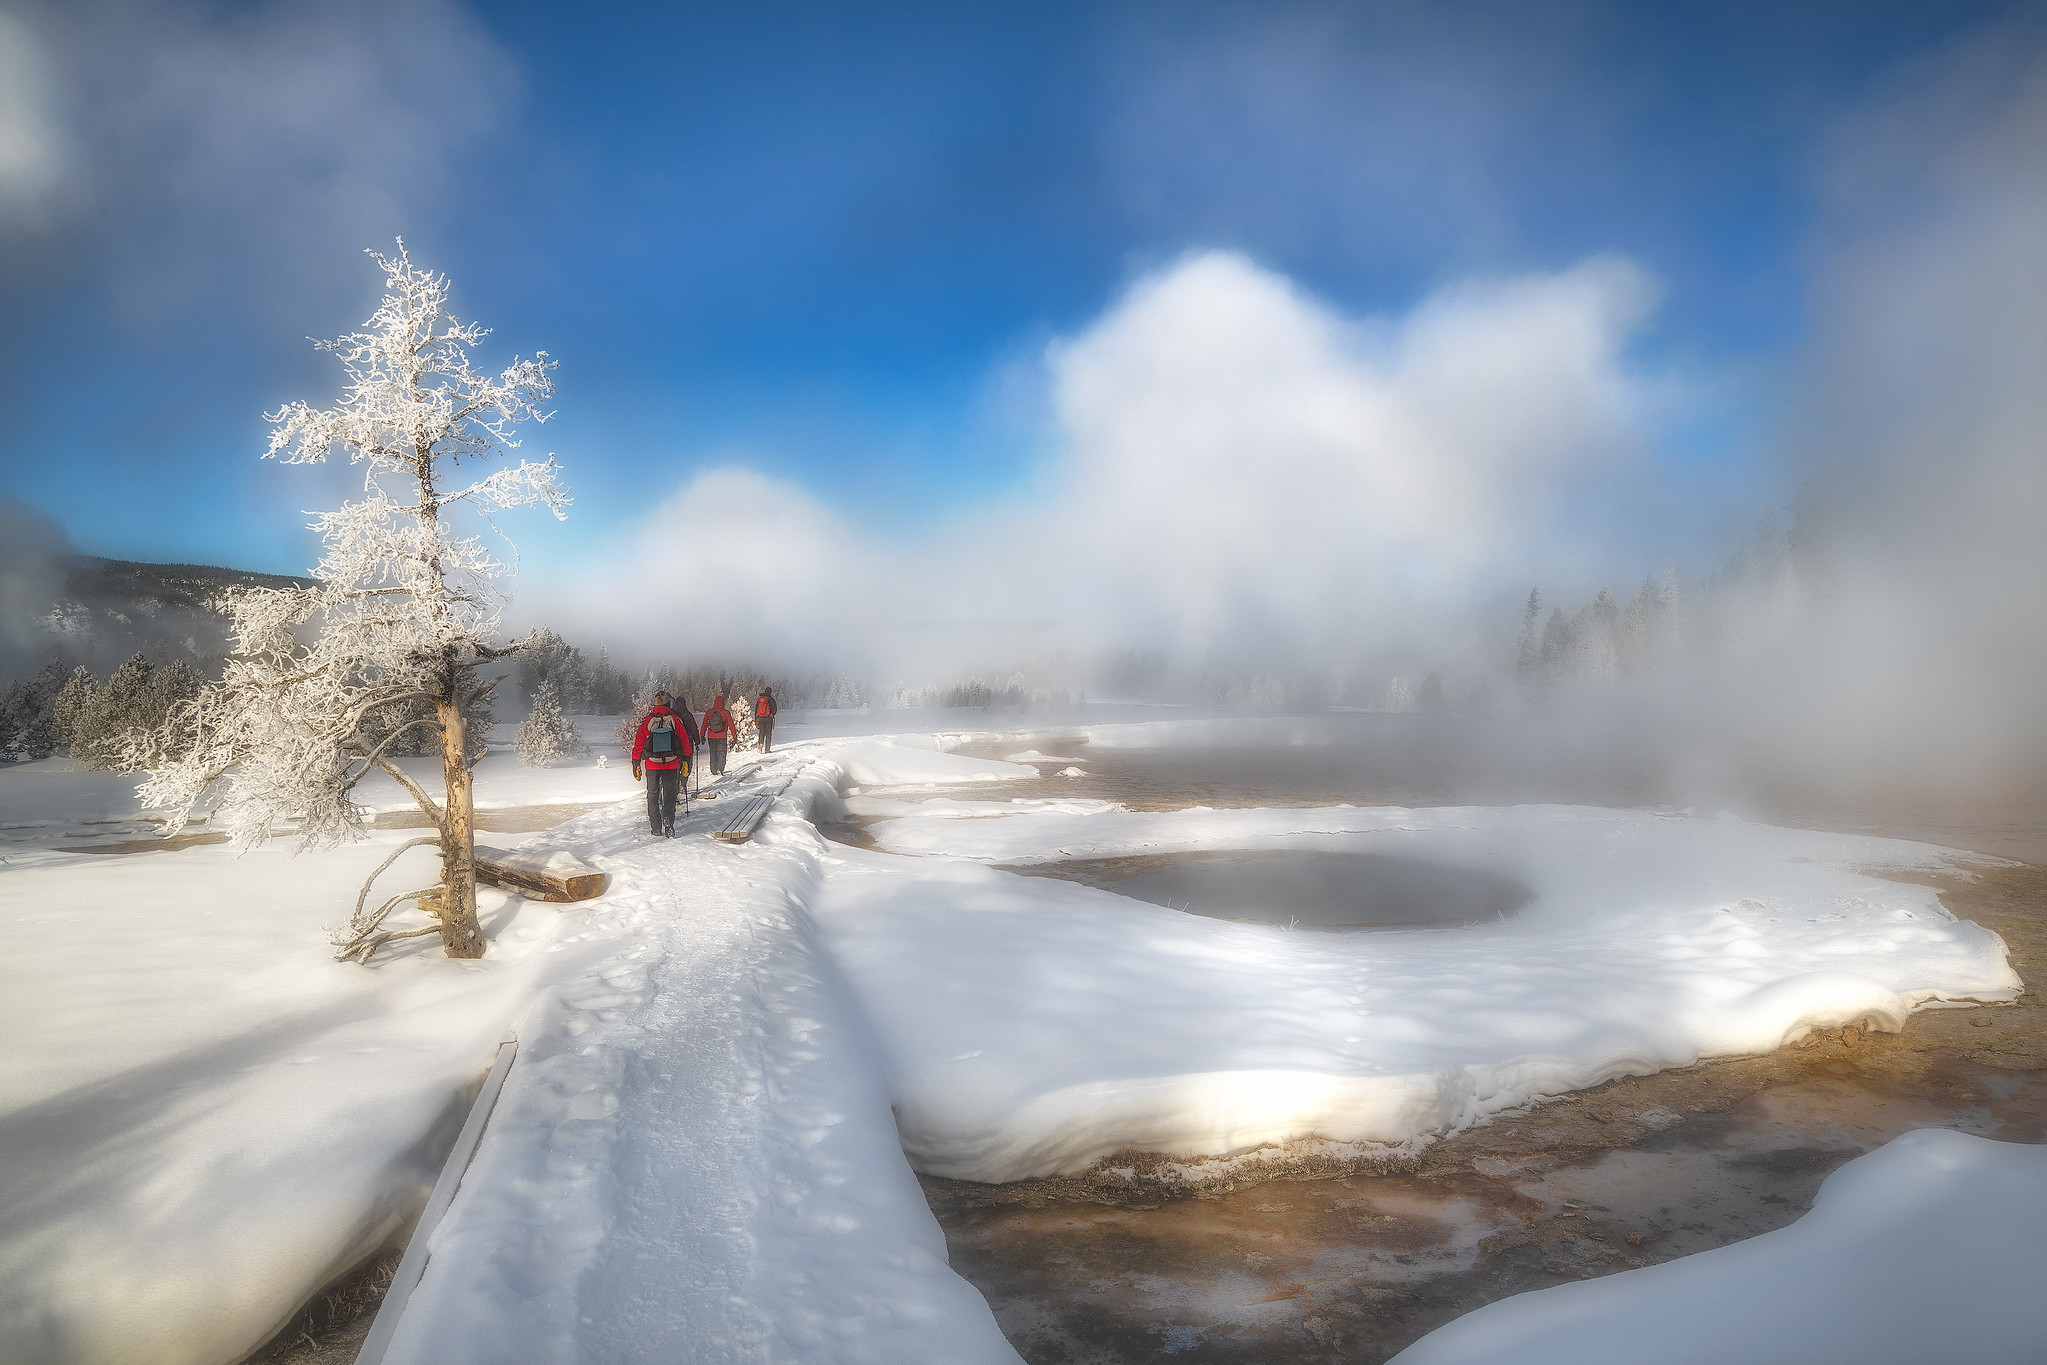 Winter Yellowstone by Peter Cheung